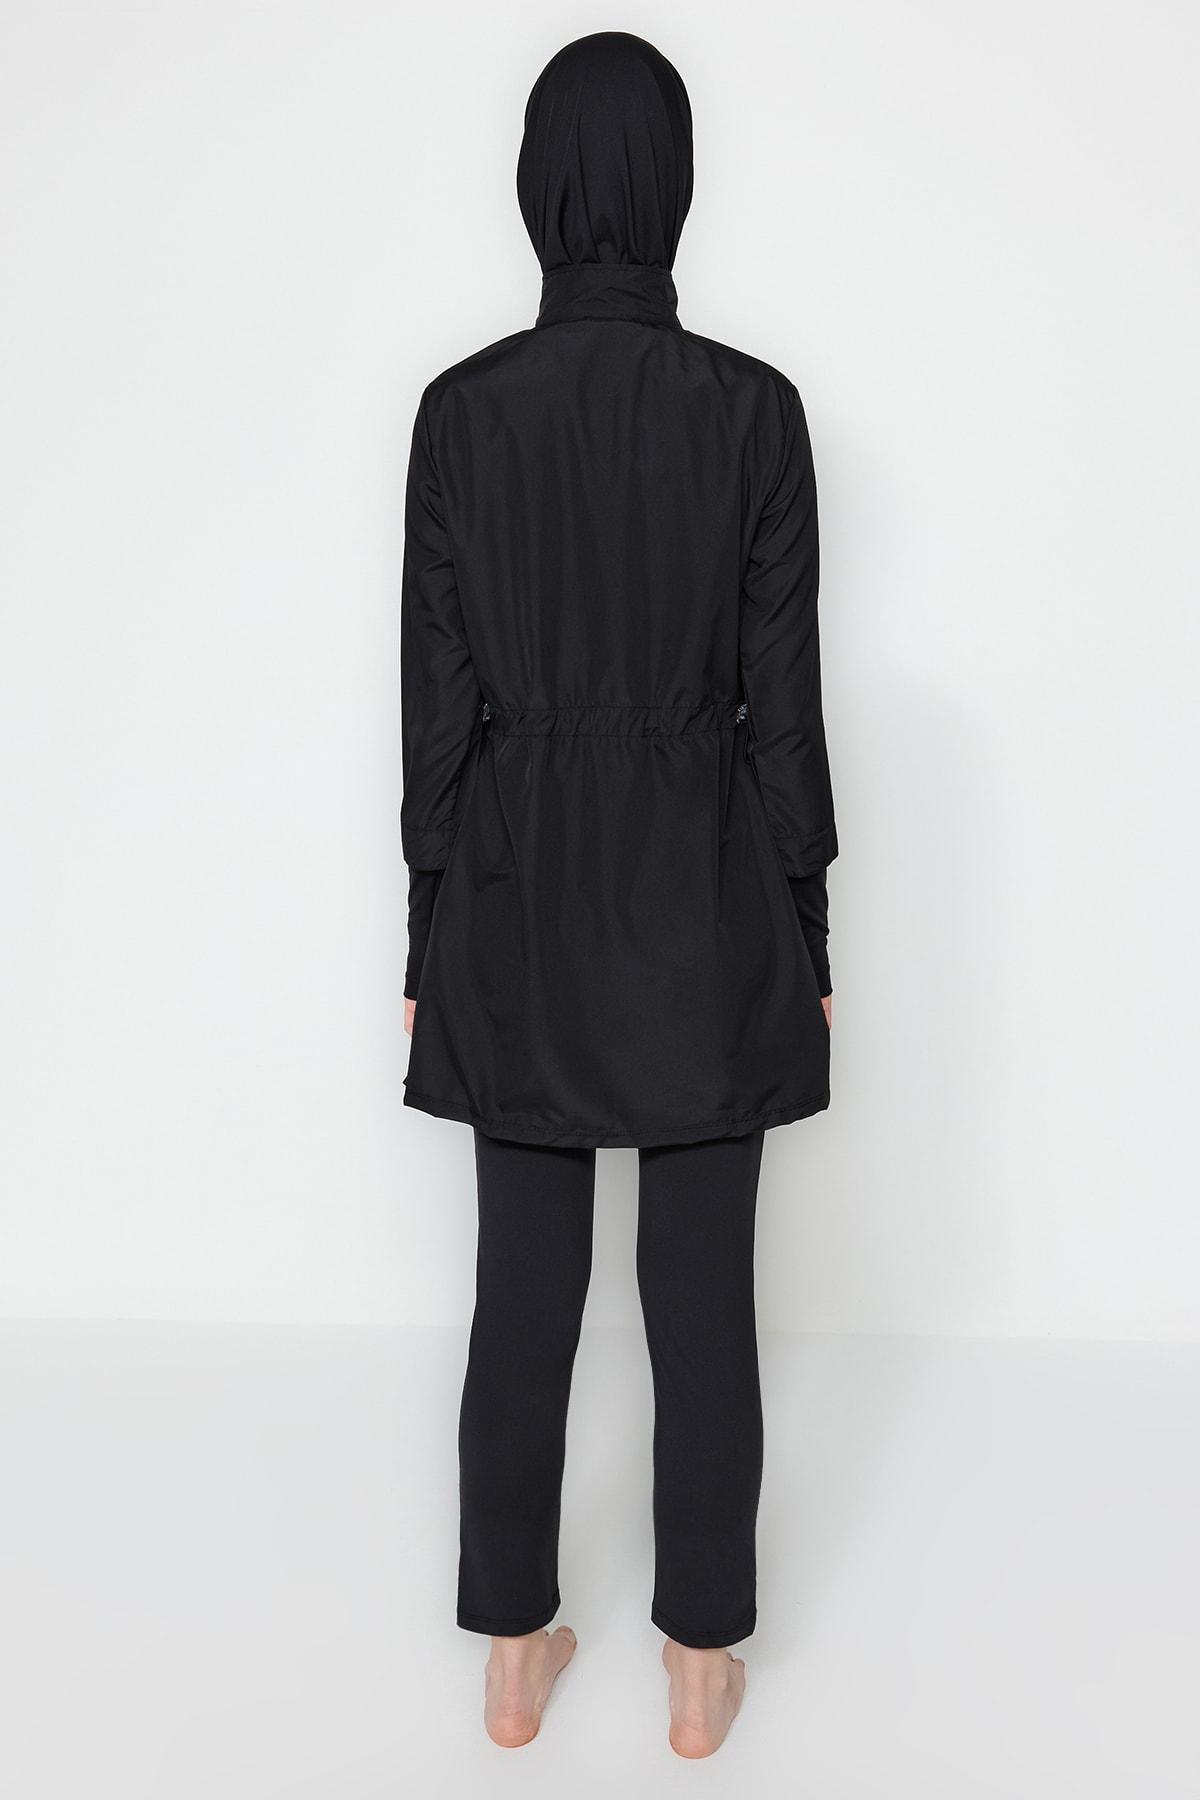 Trendyol - Black Performance Knitted Burkini Set